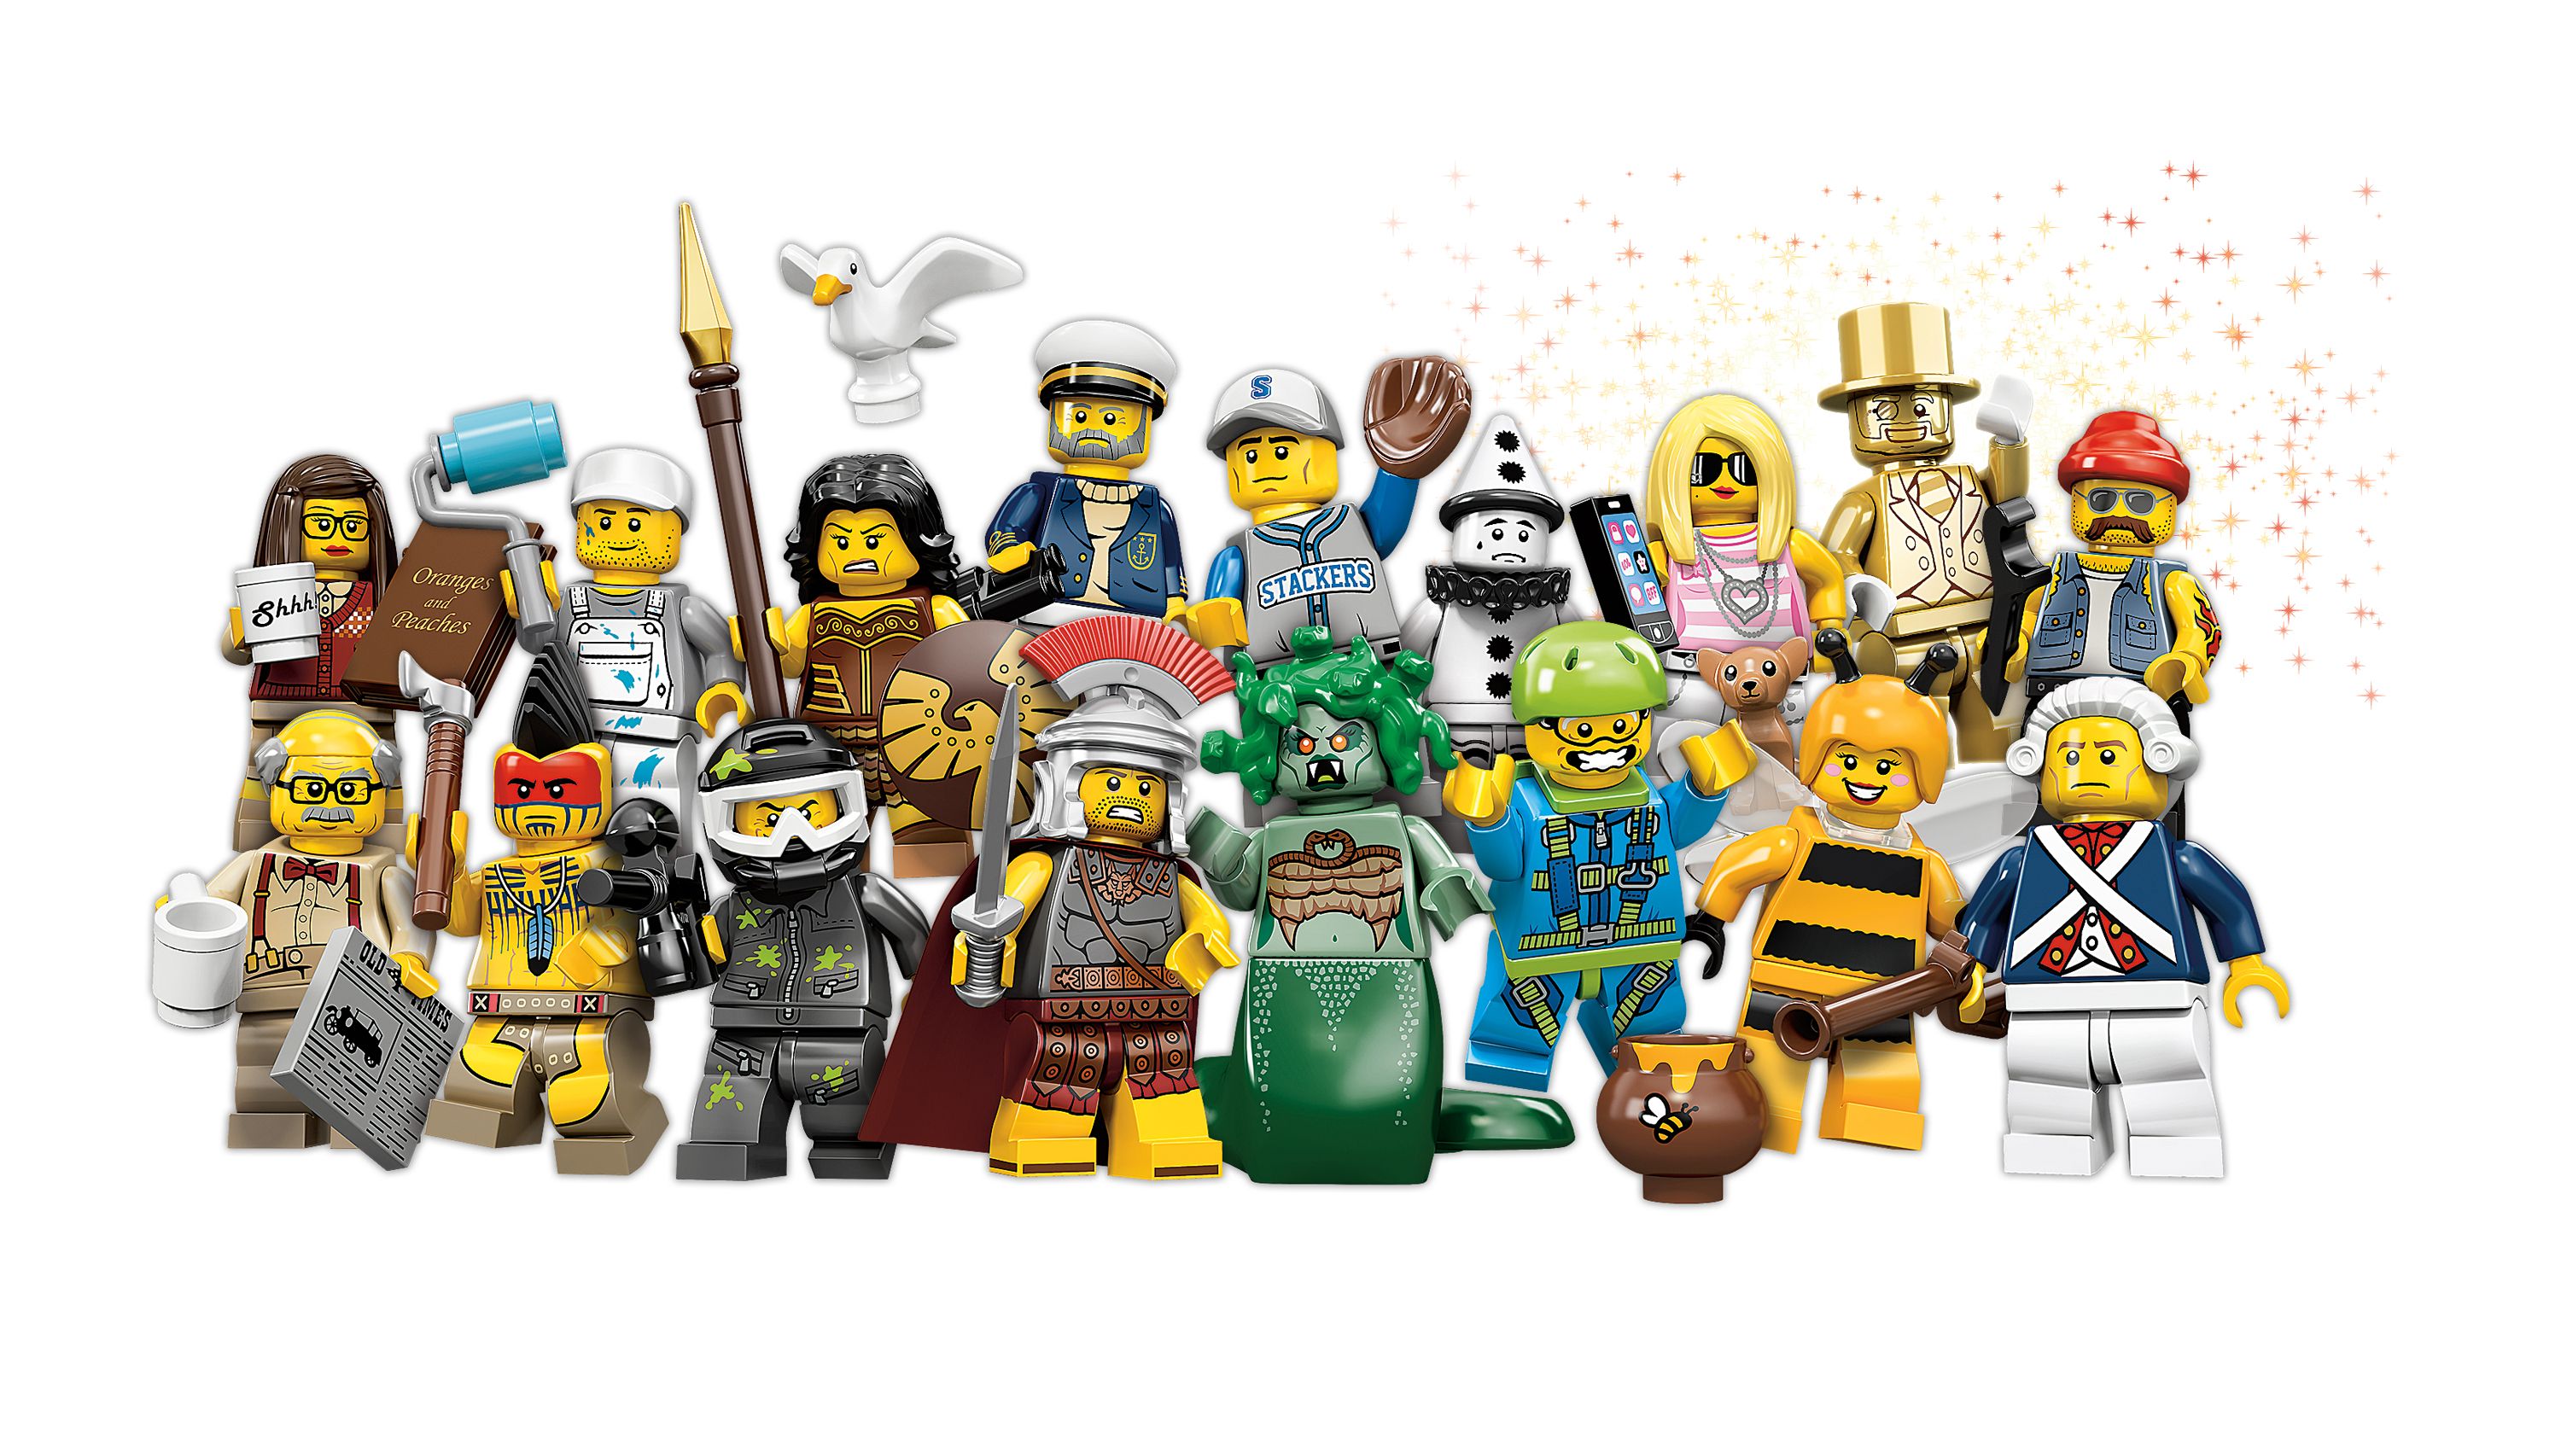 http://toysnbricks.com/wp-content/uploads/2013/02/LEGO-Series-10-Minifigures-71001-High-Resolution.jpg